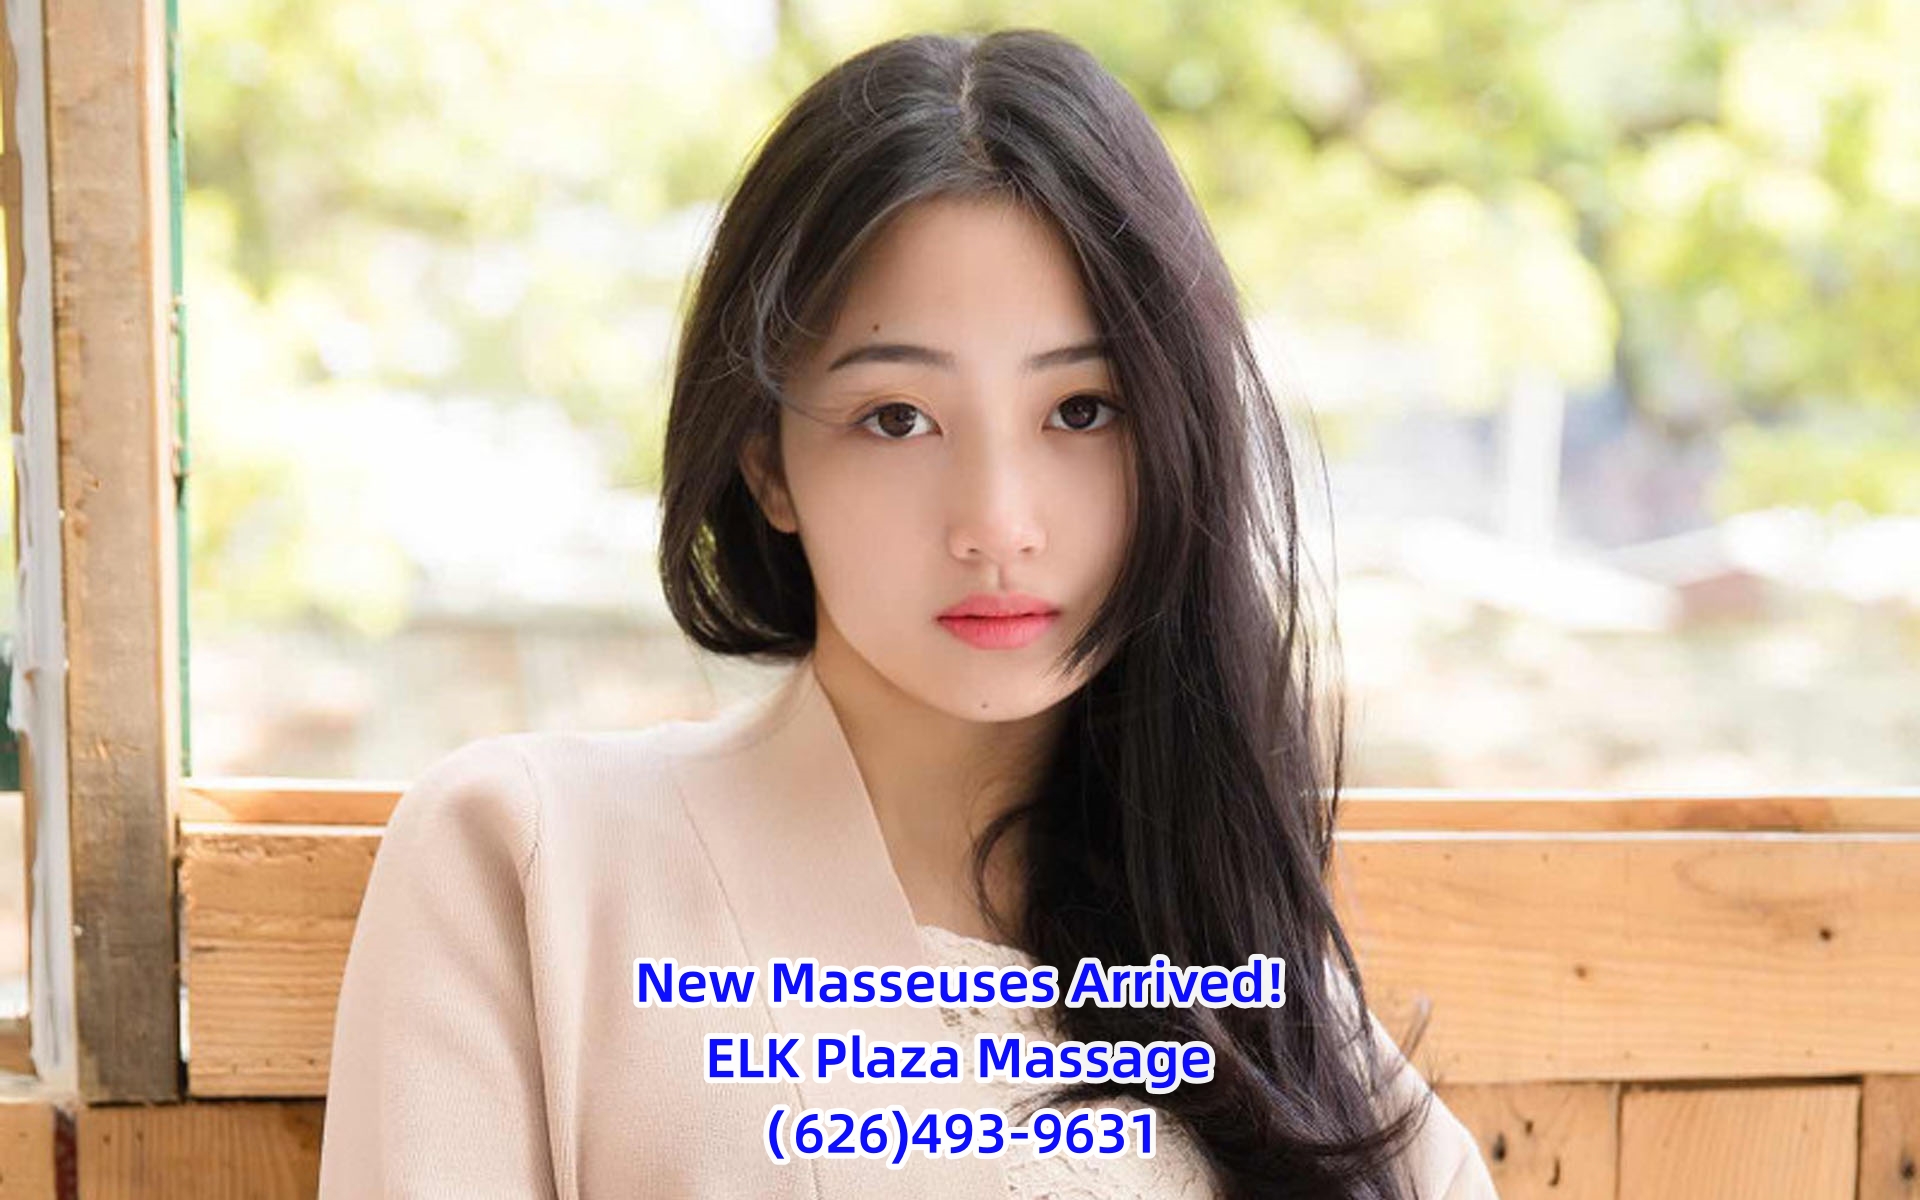 ELK Plaza Massage